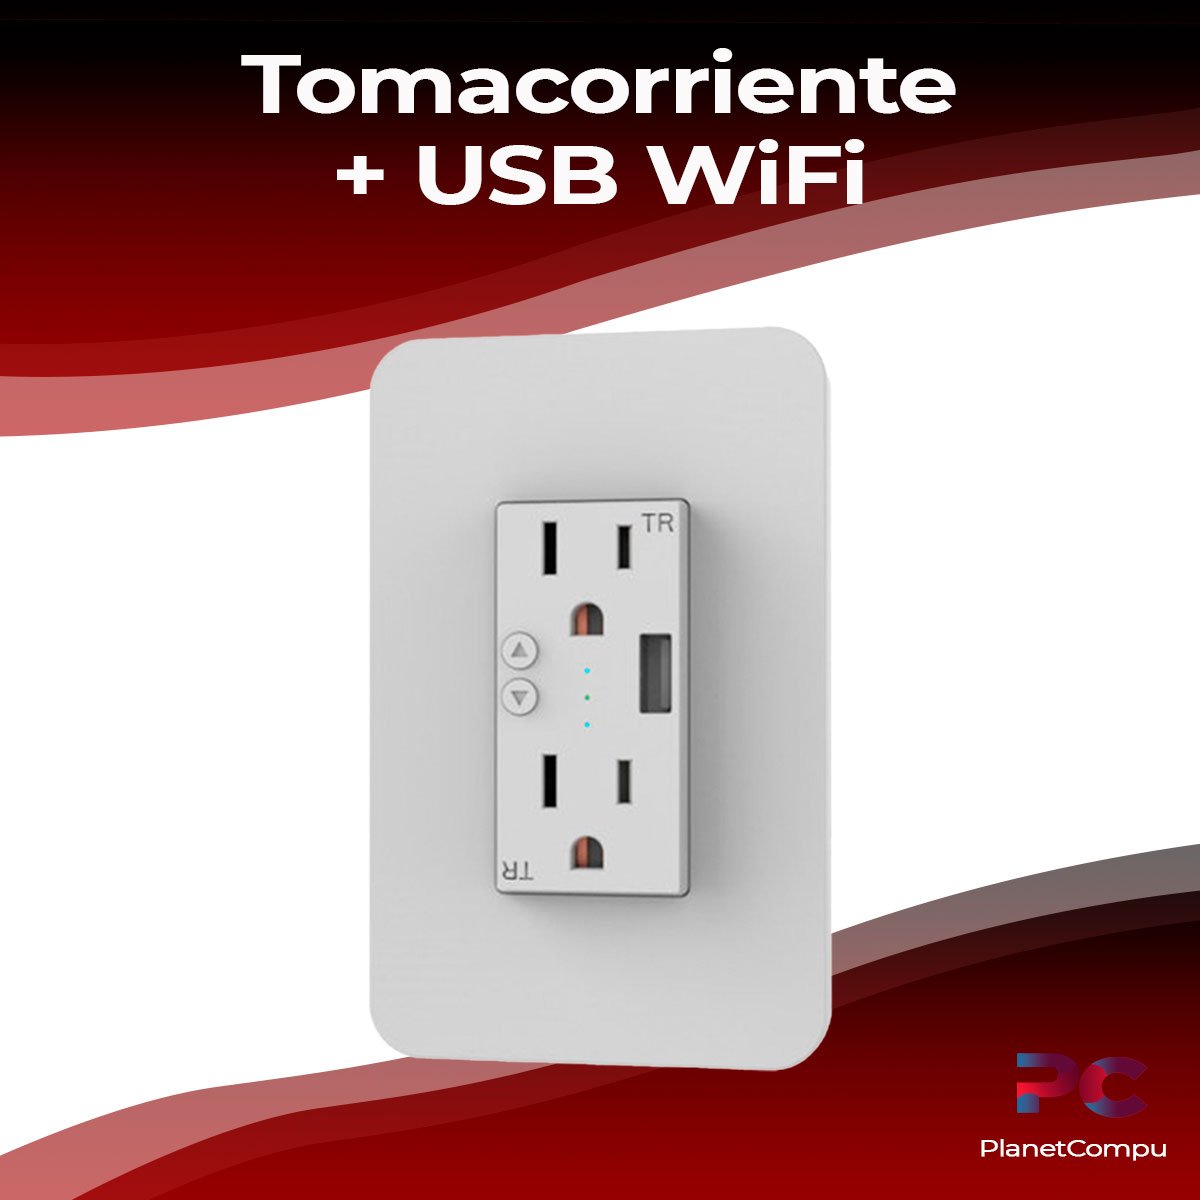 https://planetcompu.com/wp-content/uploads/2021/07/57.Tomacorriente-USB-WiFi.jpg